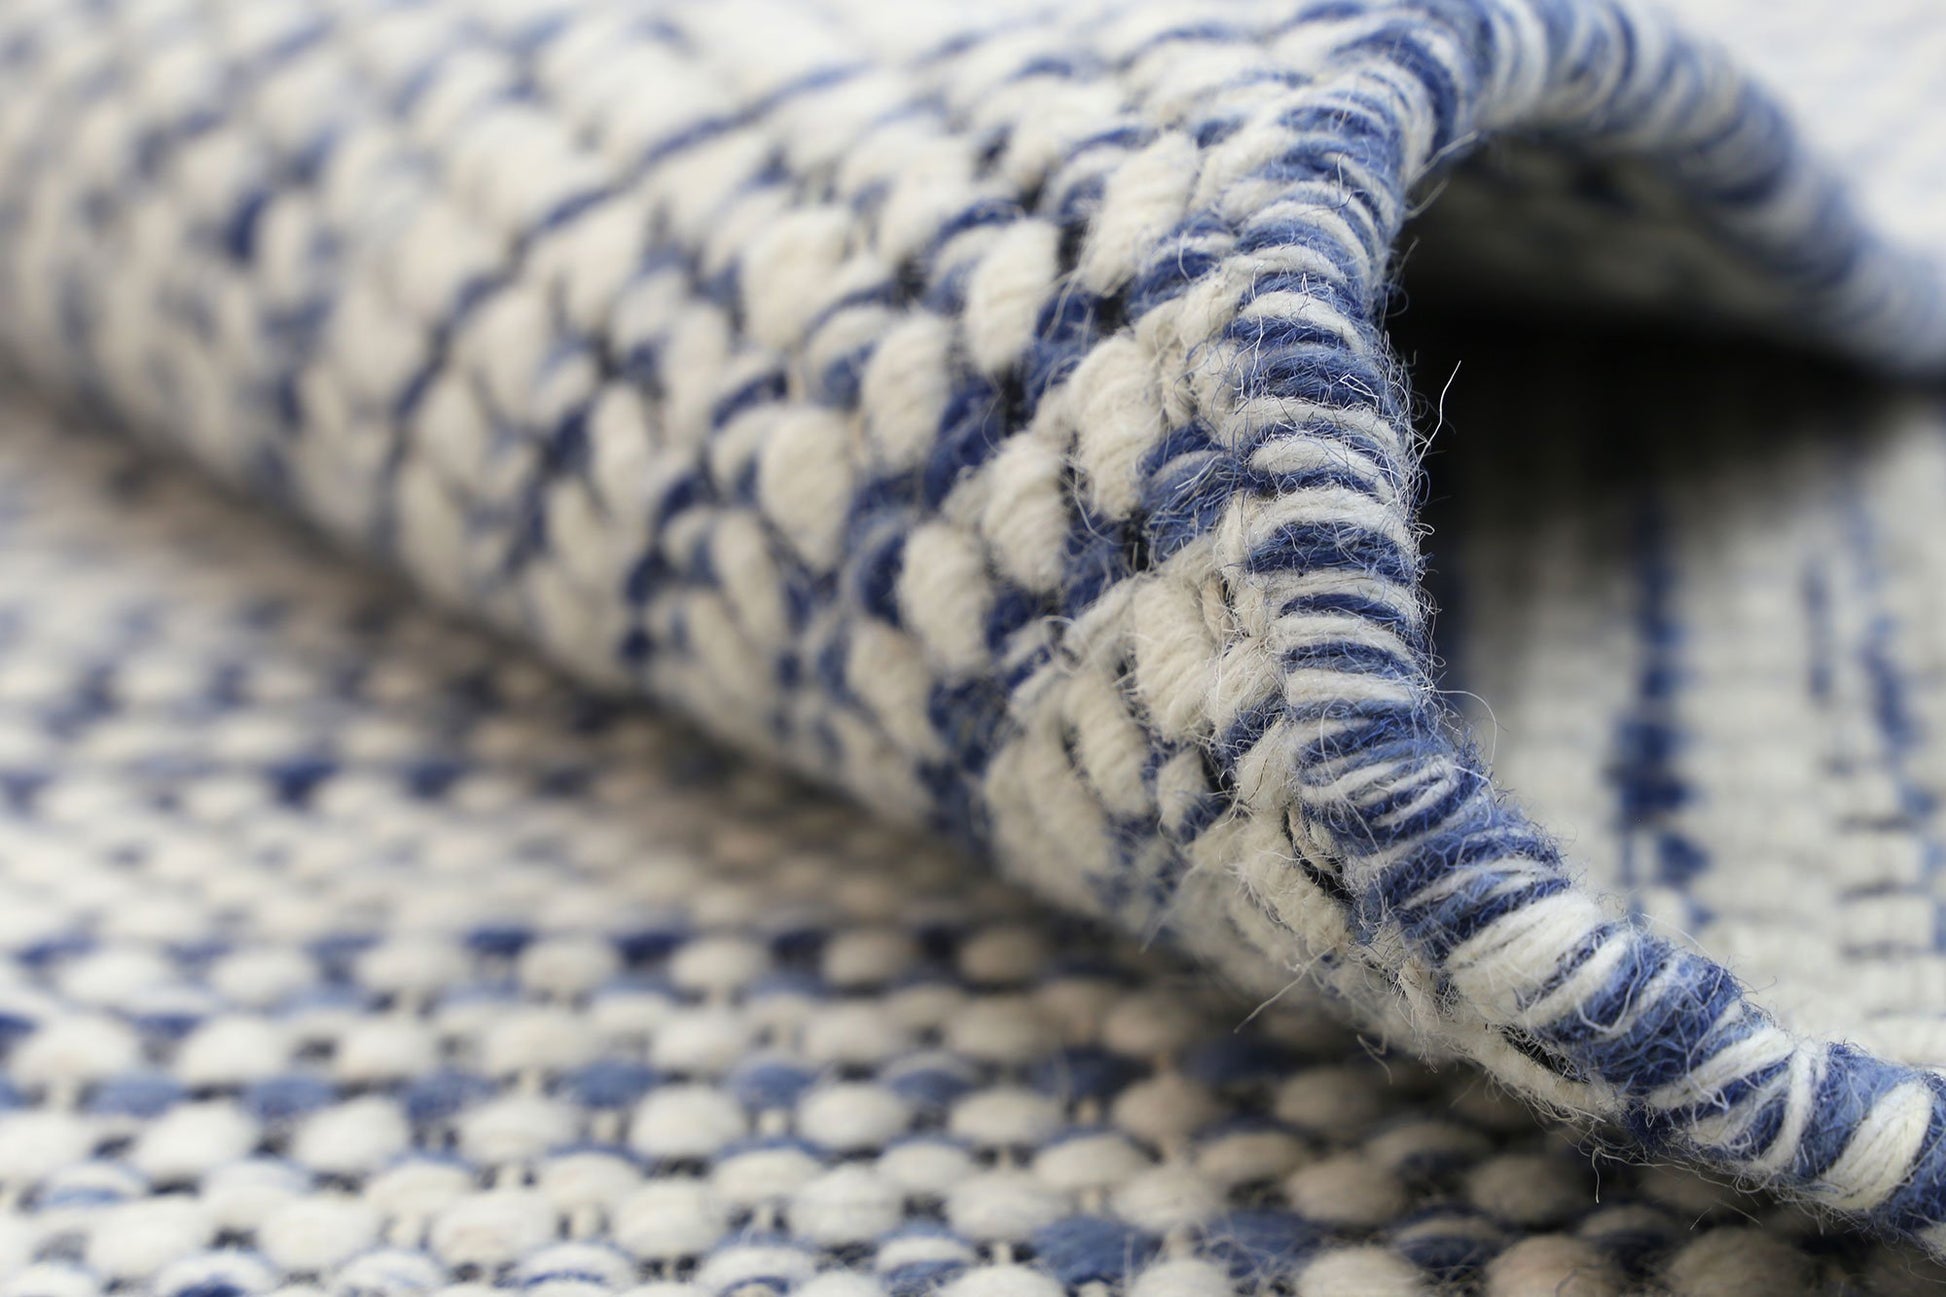 Scandi Blue Reversible Wool Rug - Nova Rugs